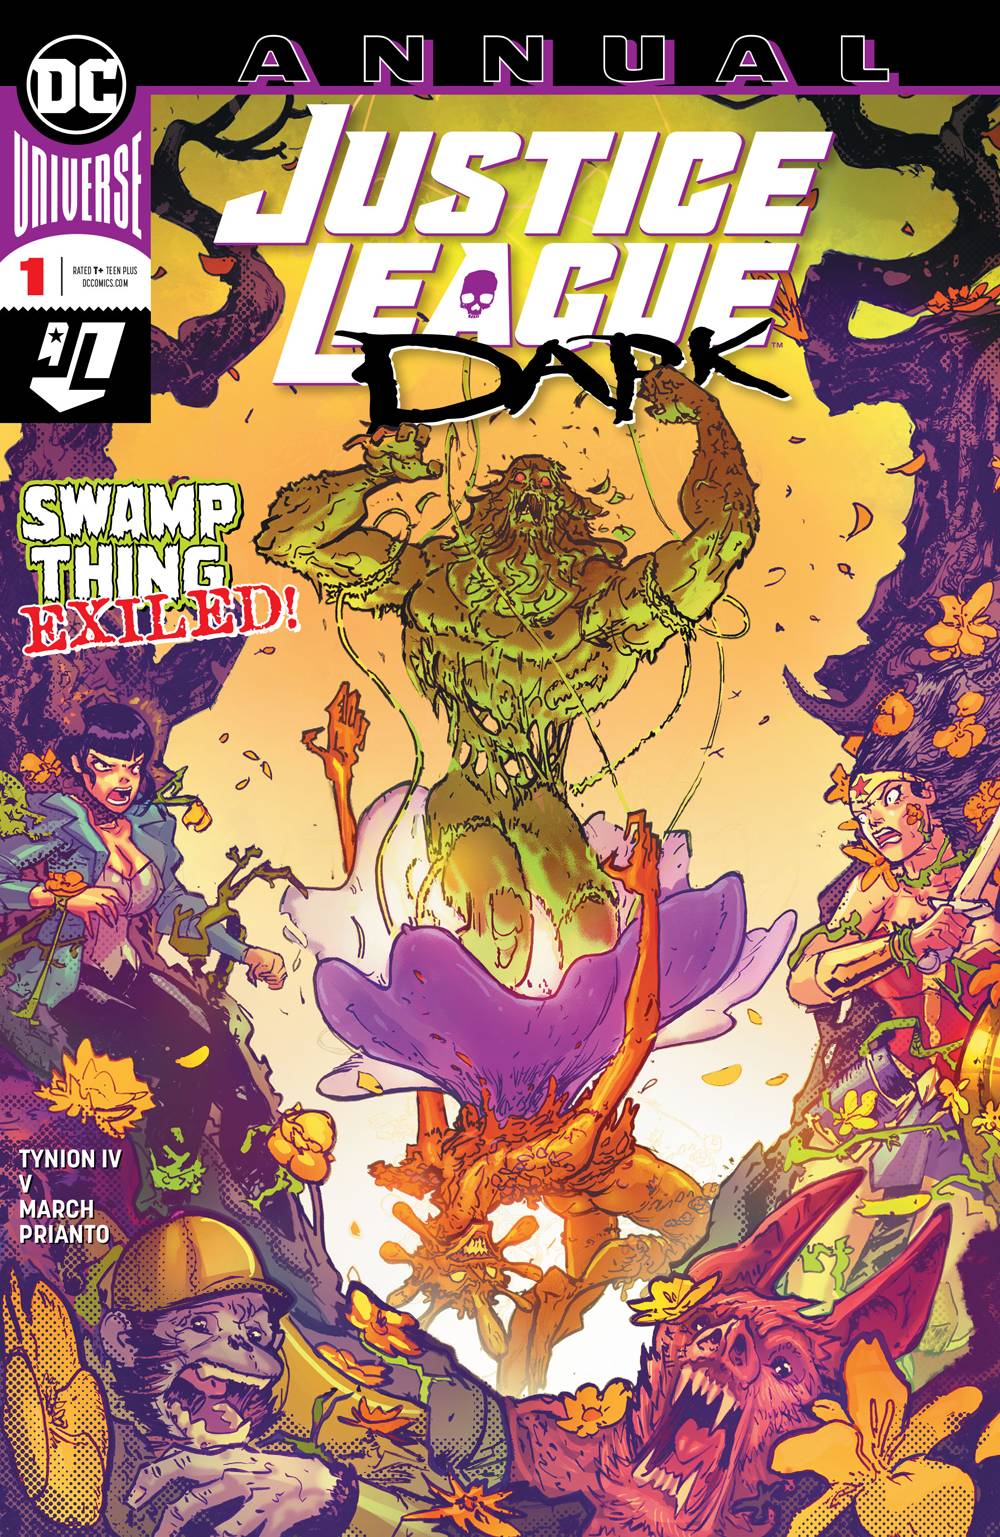 Justice League Dark Annual #1 - State of Comics